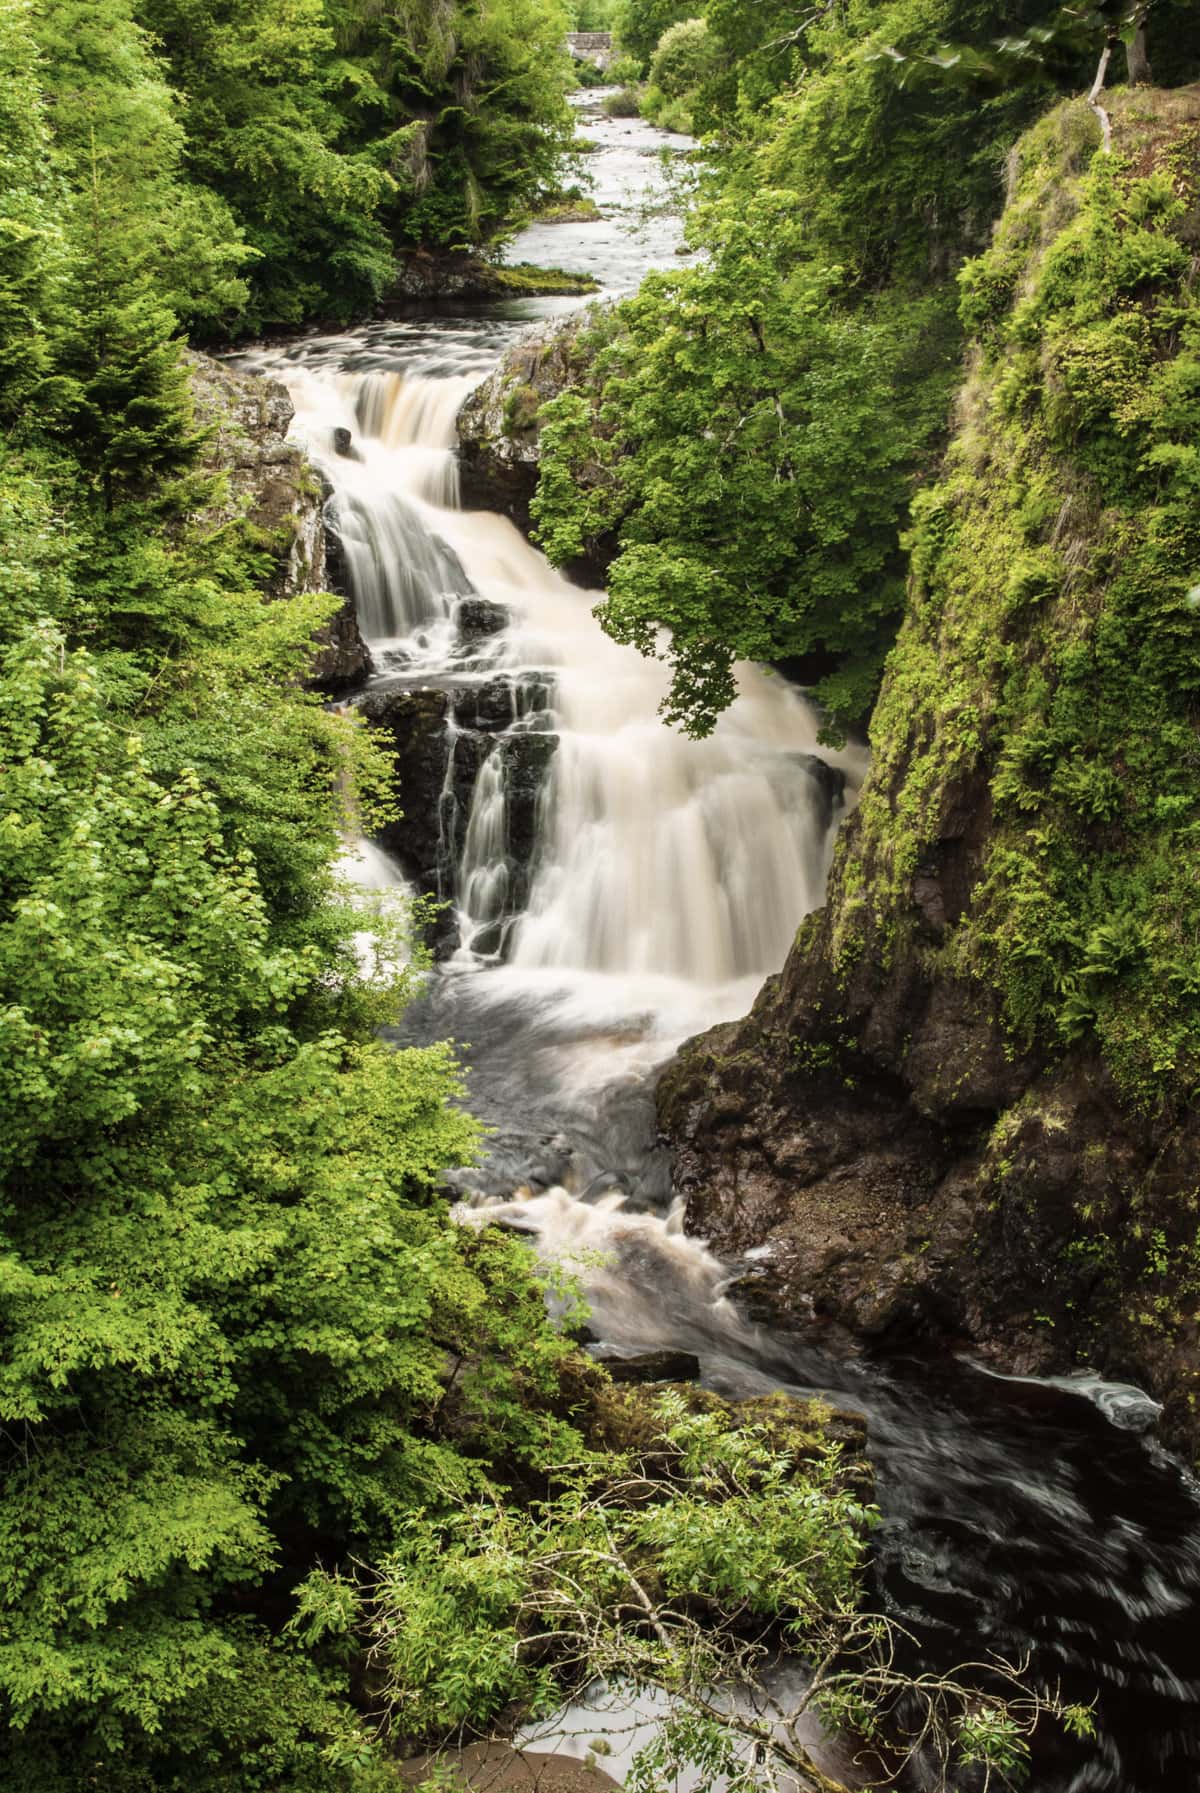 Reekie Linn Waterfall in Perthshire, Scotland